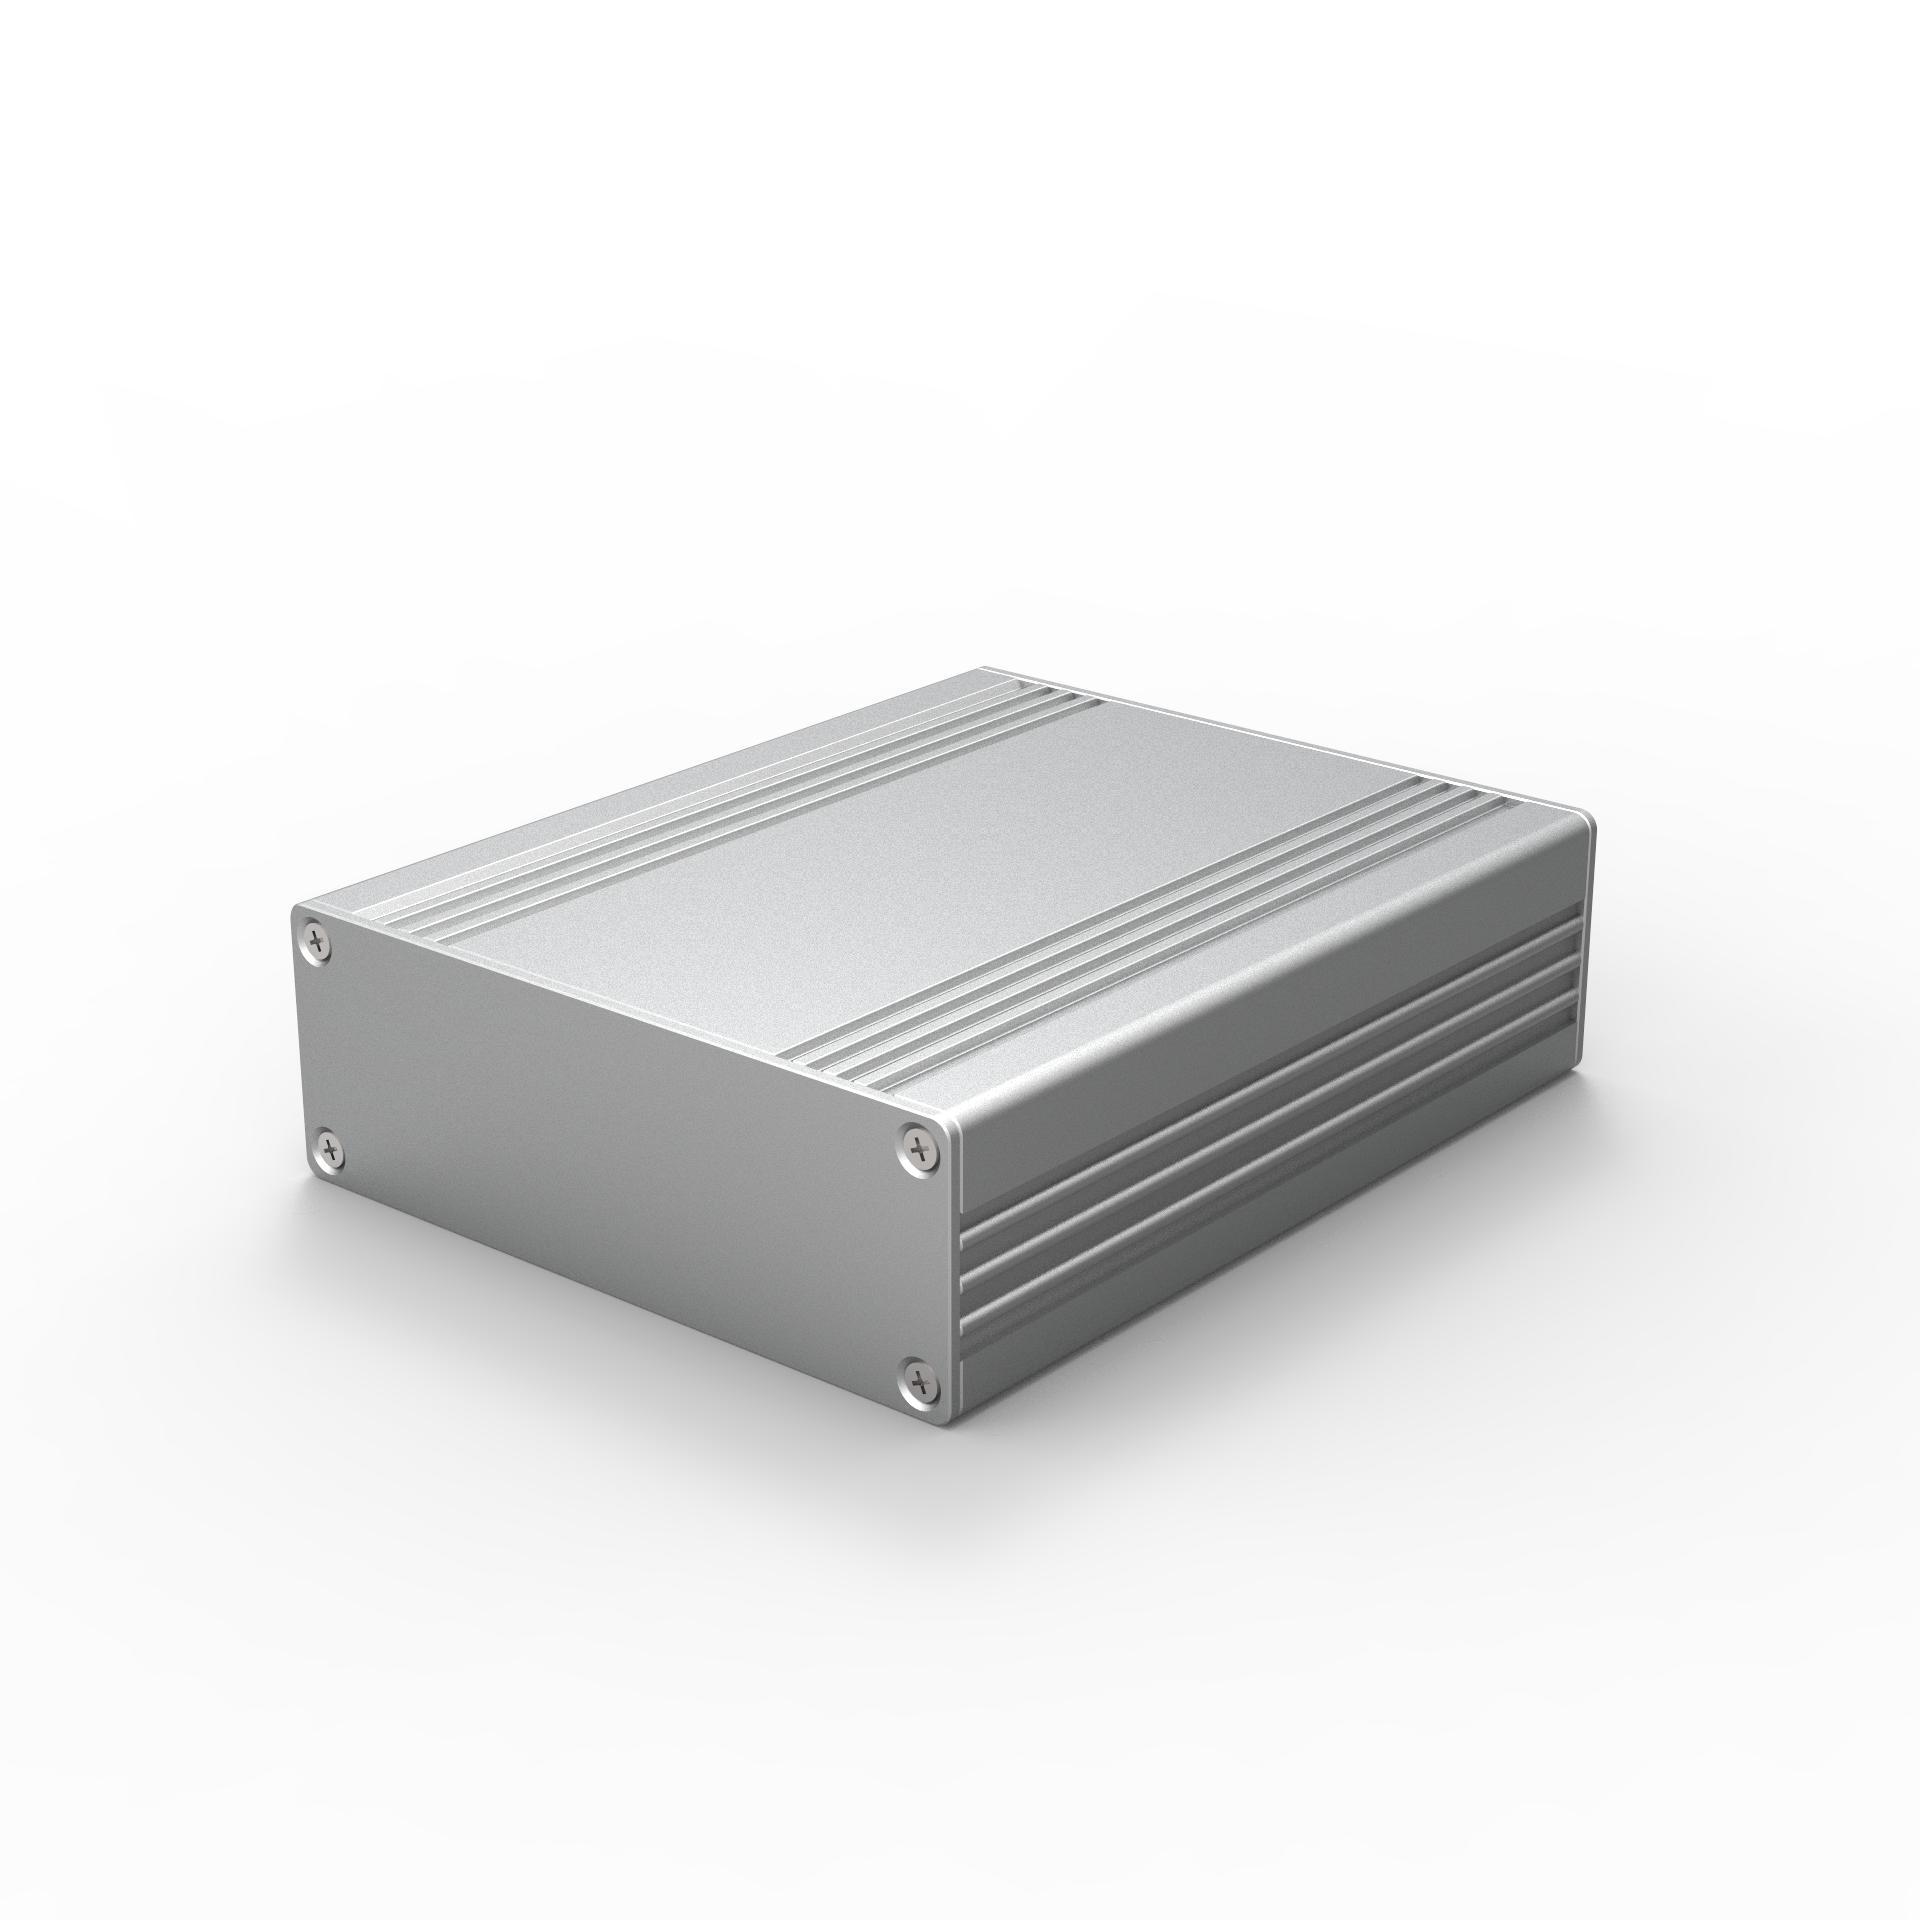 82.8x28.8x100 small aluminum extrusion catalog pcb enclosure electronic box